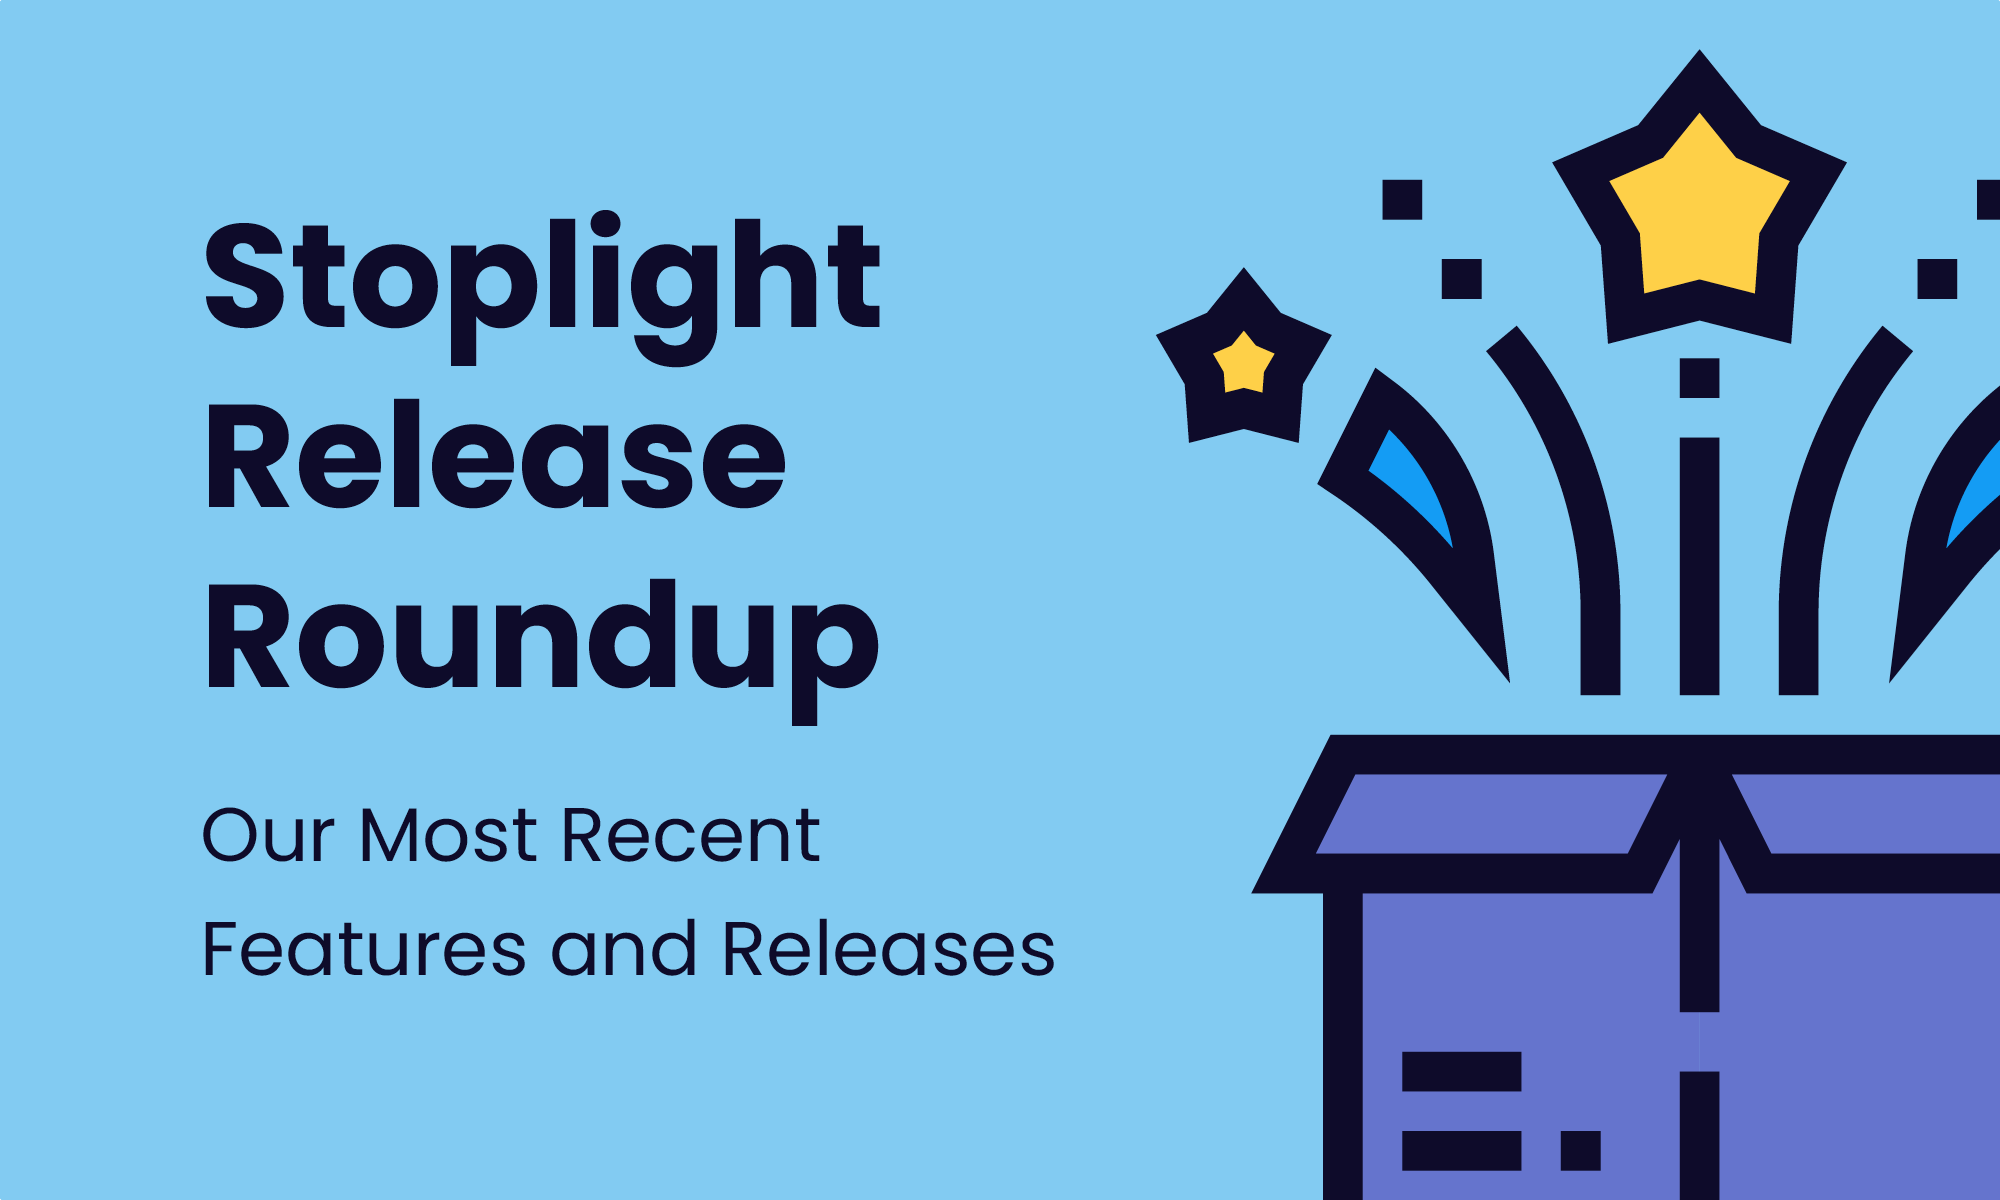 Stoplight Release Roundup